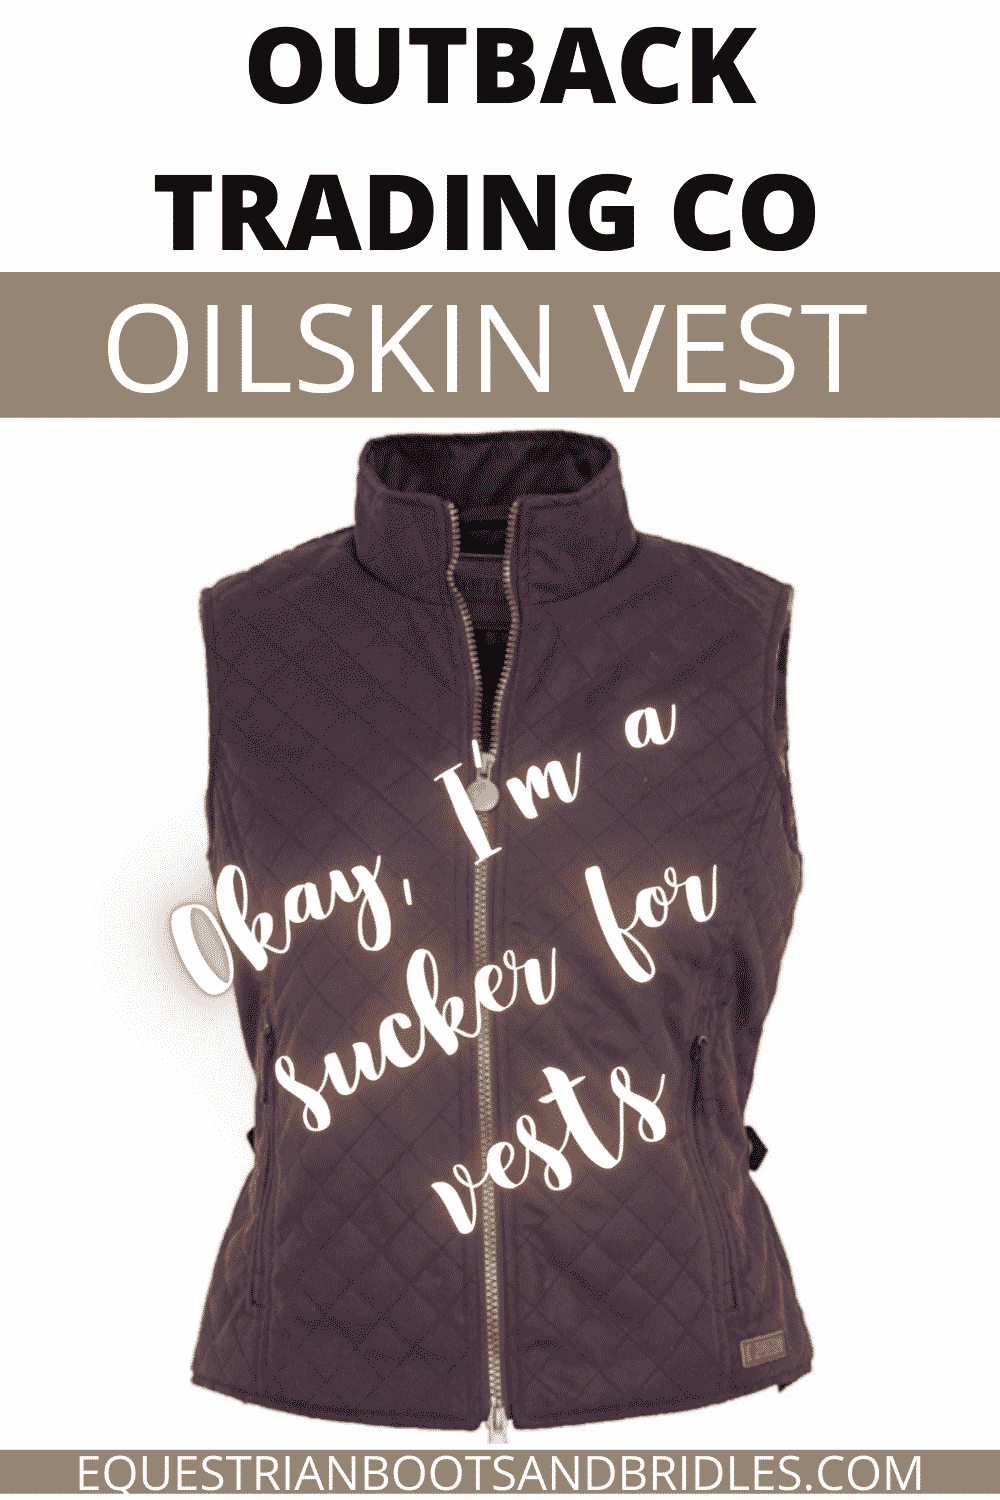 Outback Trading Co Oilskin Vest